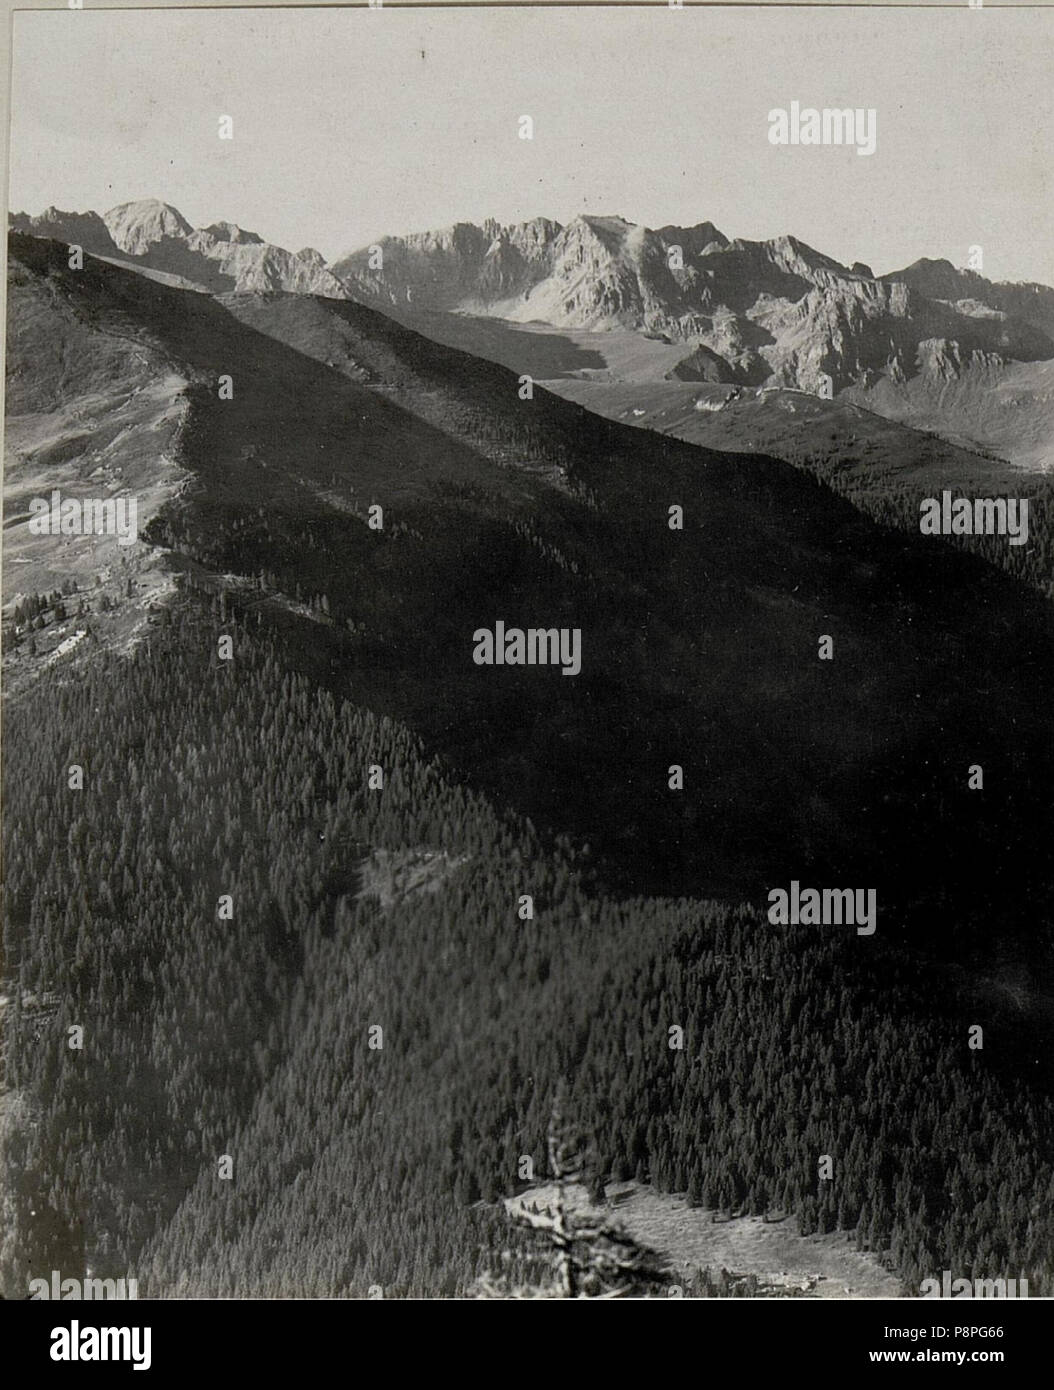 451 Panorama, Standpunkt Salubio. ¤ 1887. (2. Teilbild zu WK1 ALB083 24378 a) (BildID) 15632365 Stockfoto